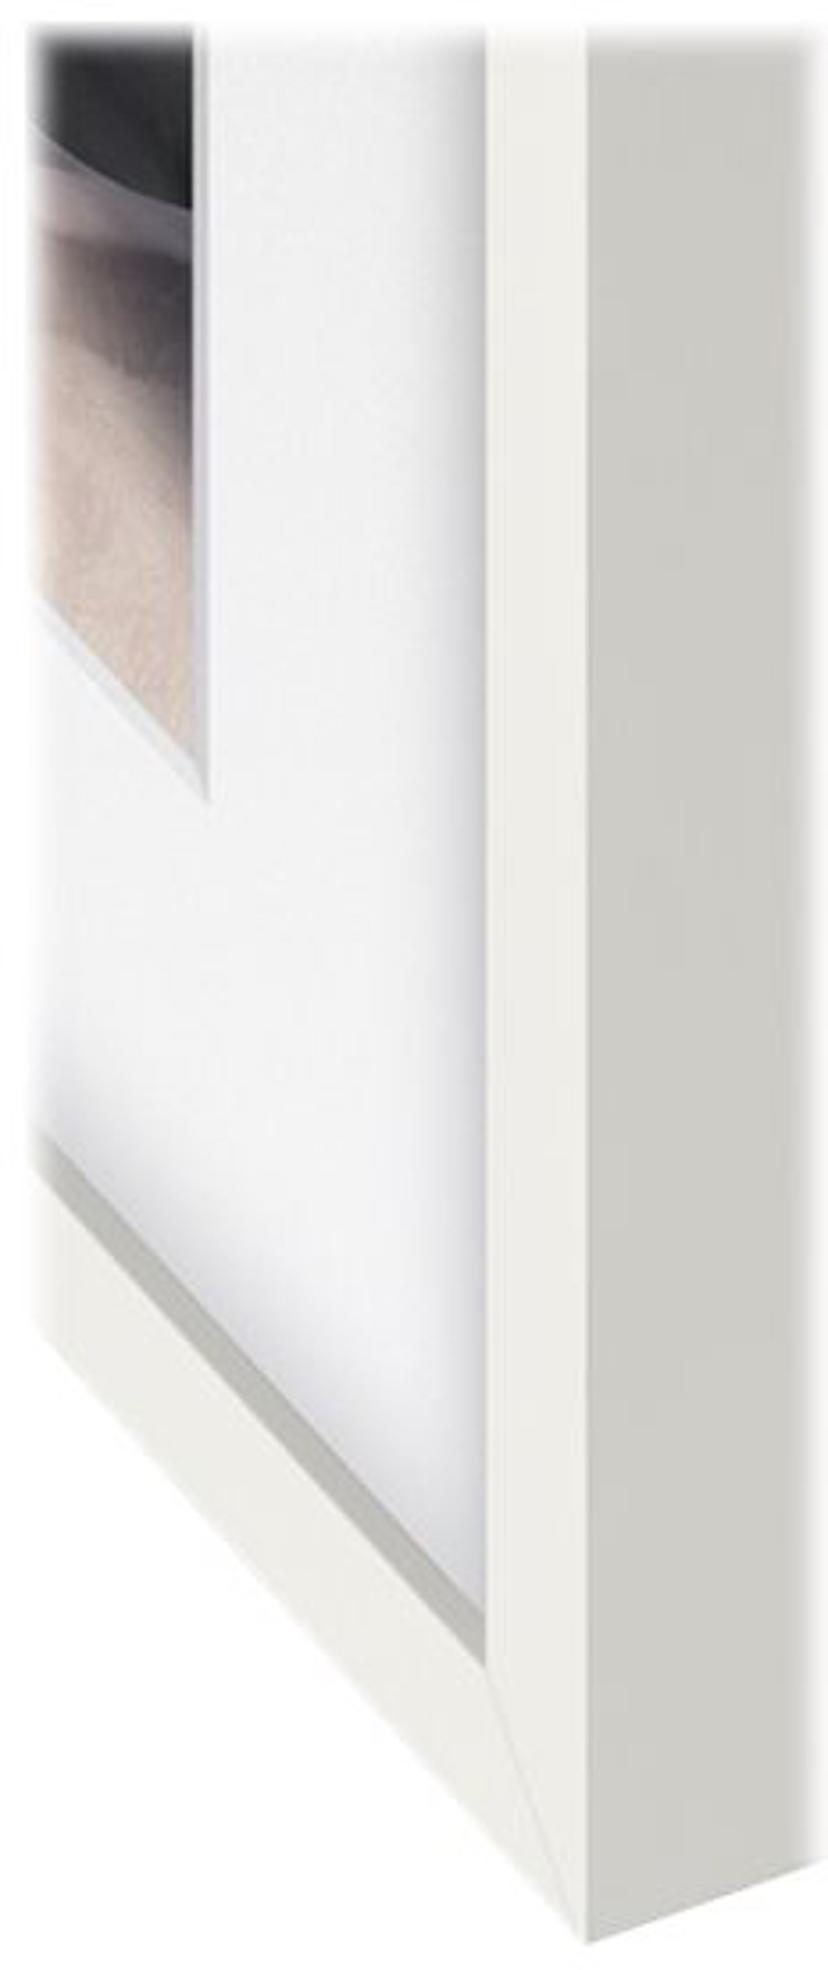 Samsung Frame Ram 50" White